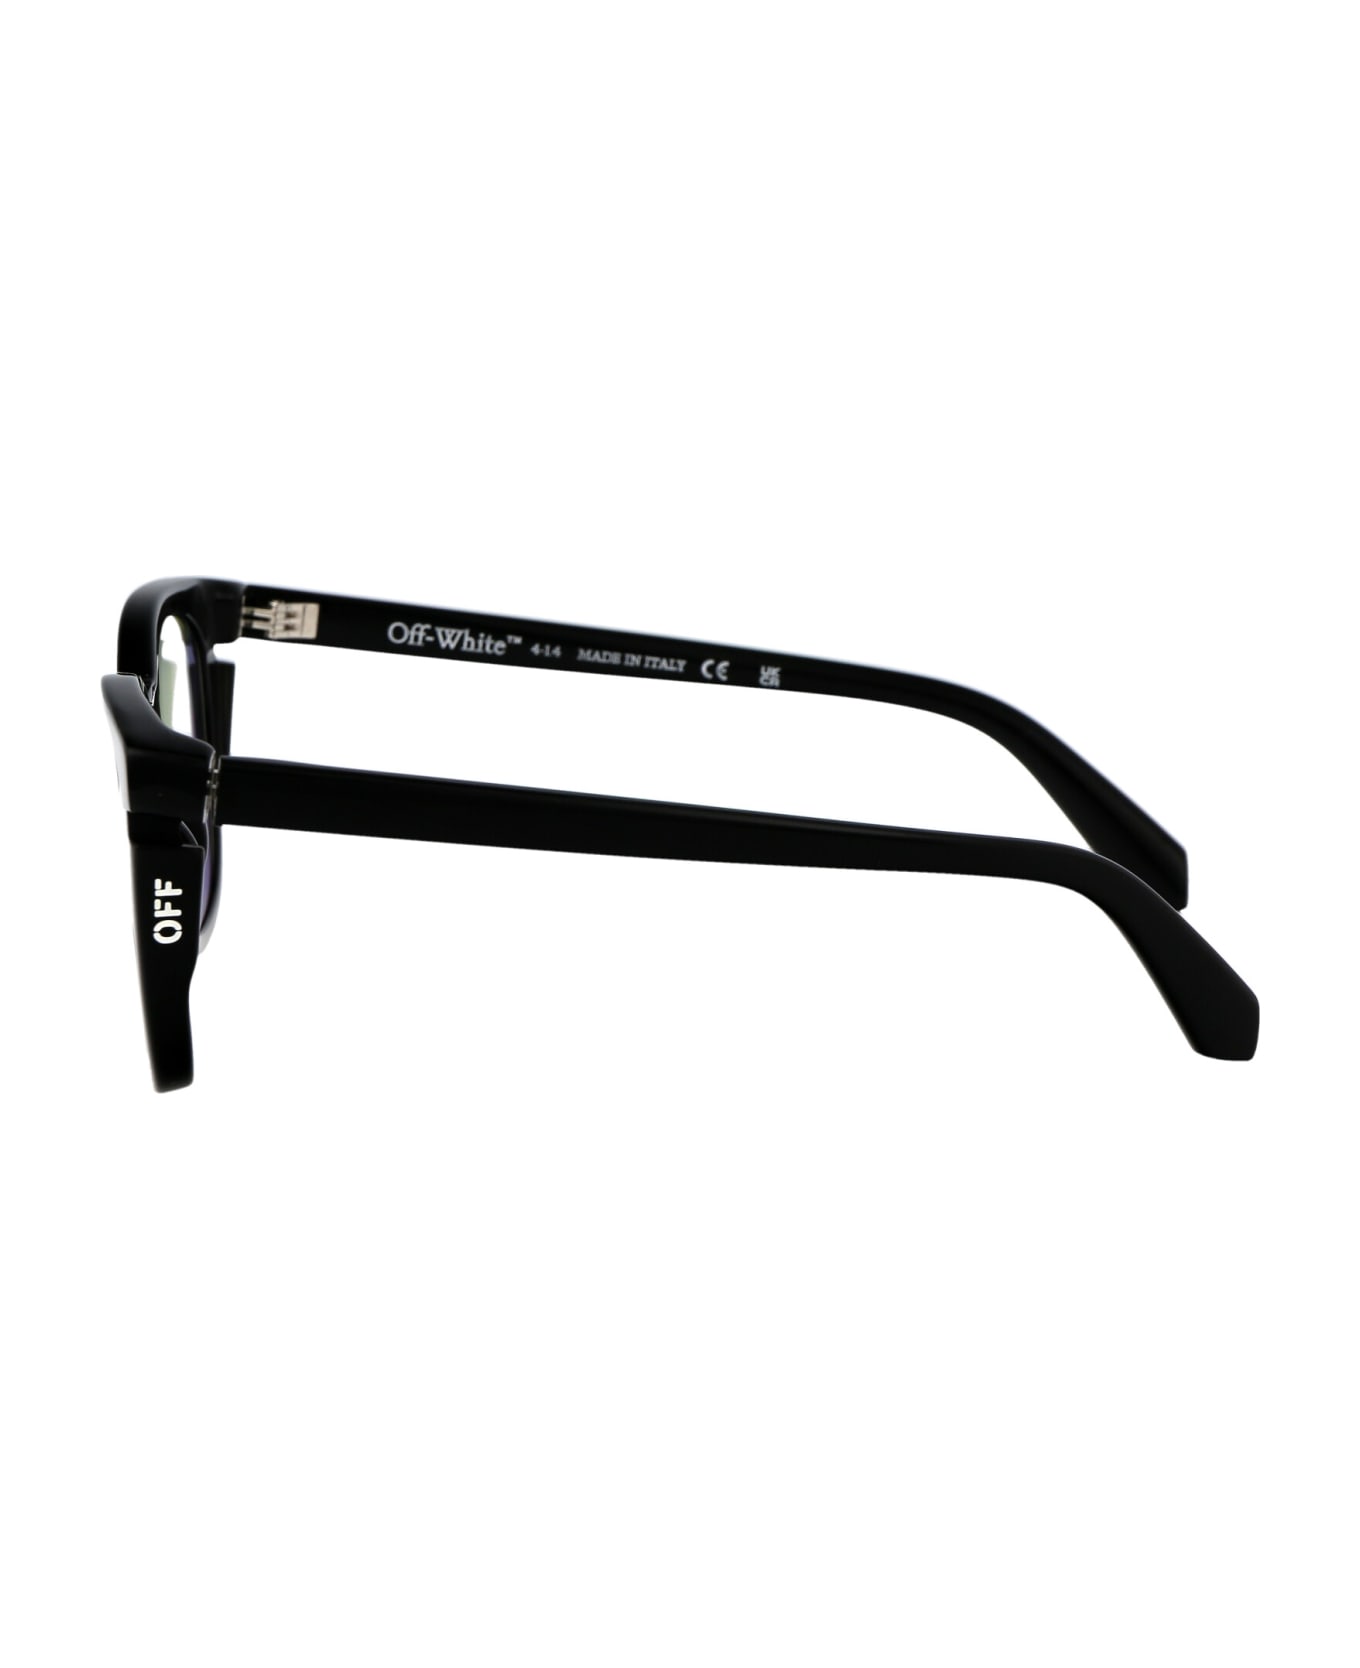 Off-White Optical Style 51 Glasses - 1000 BLACK